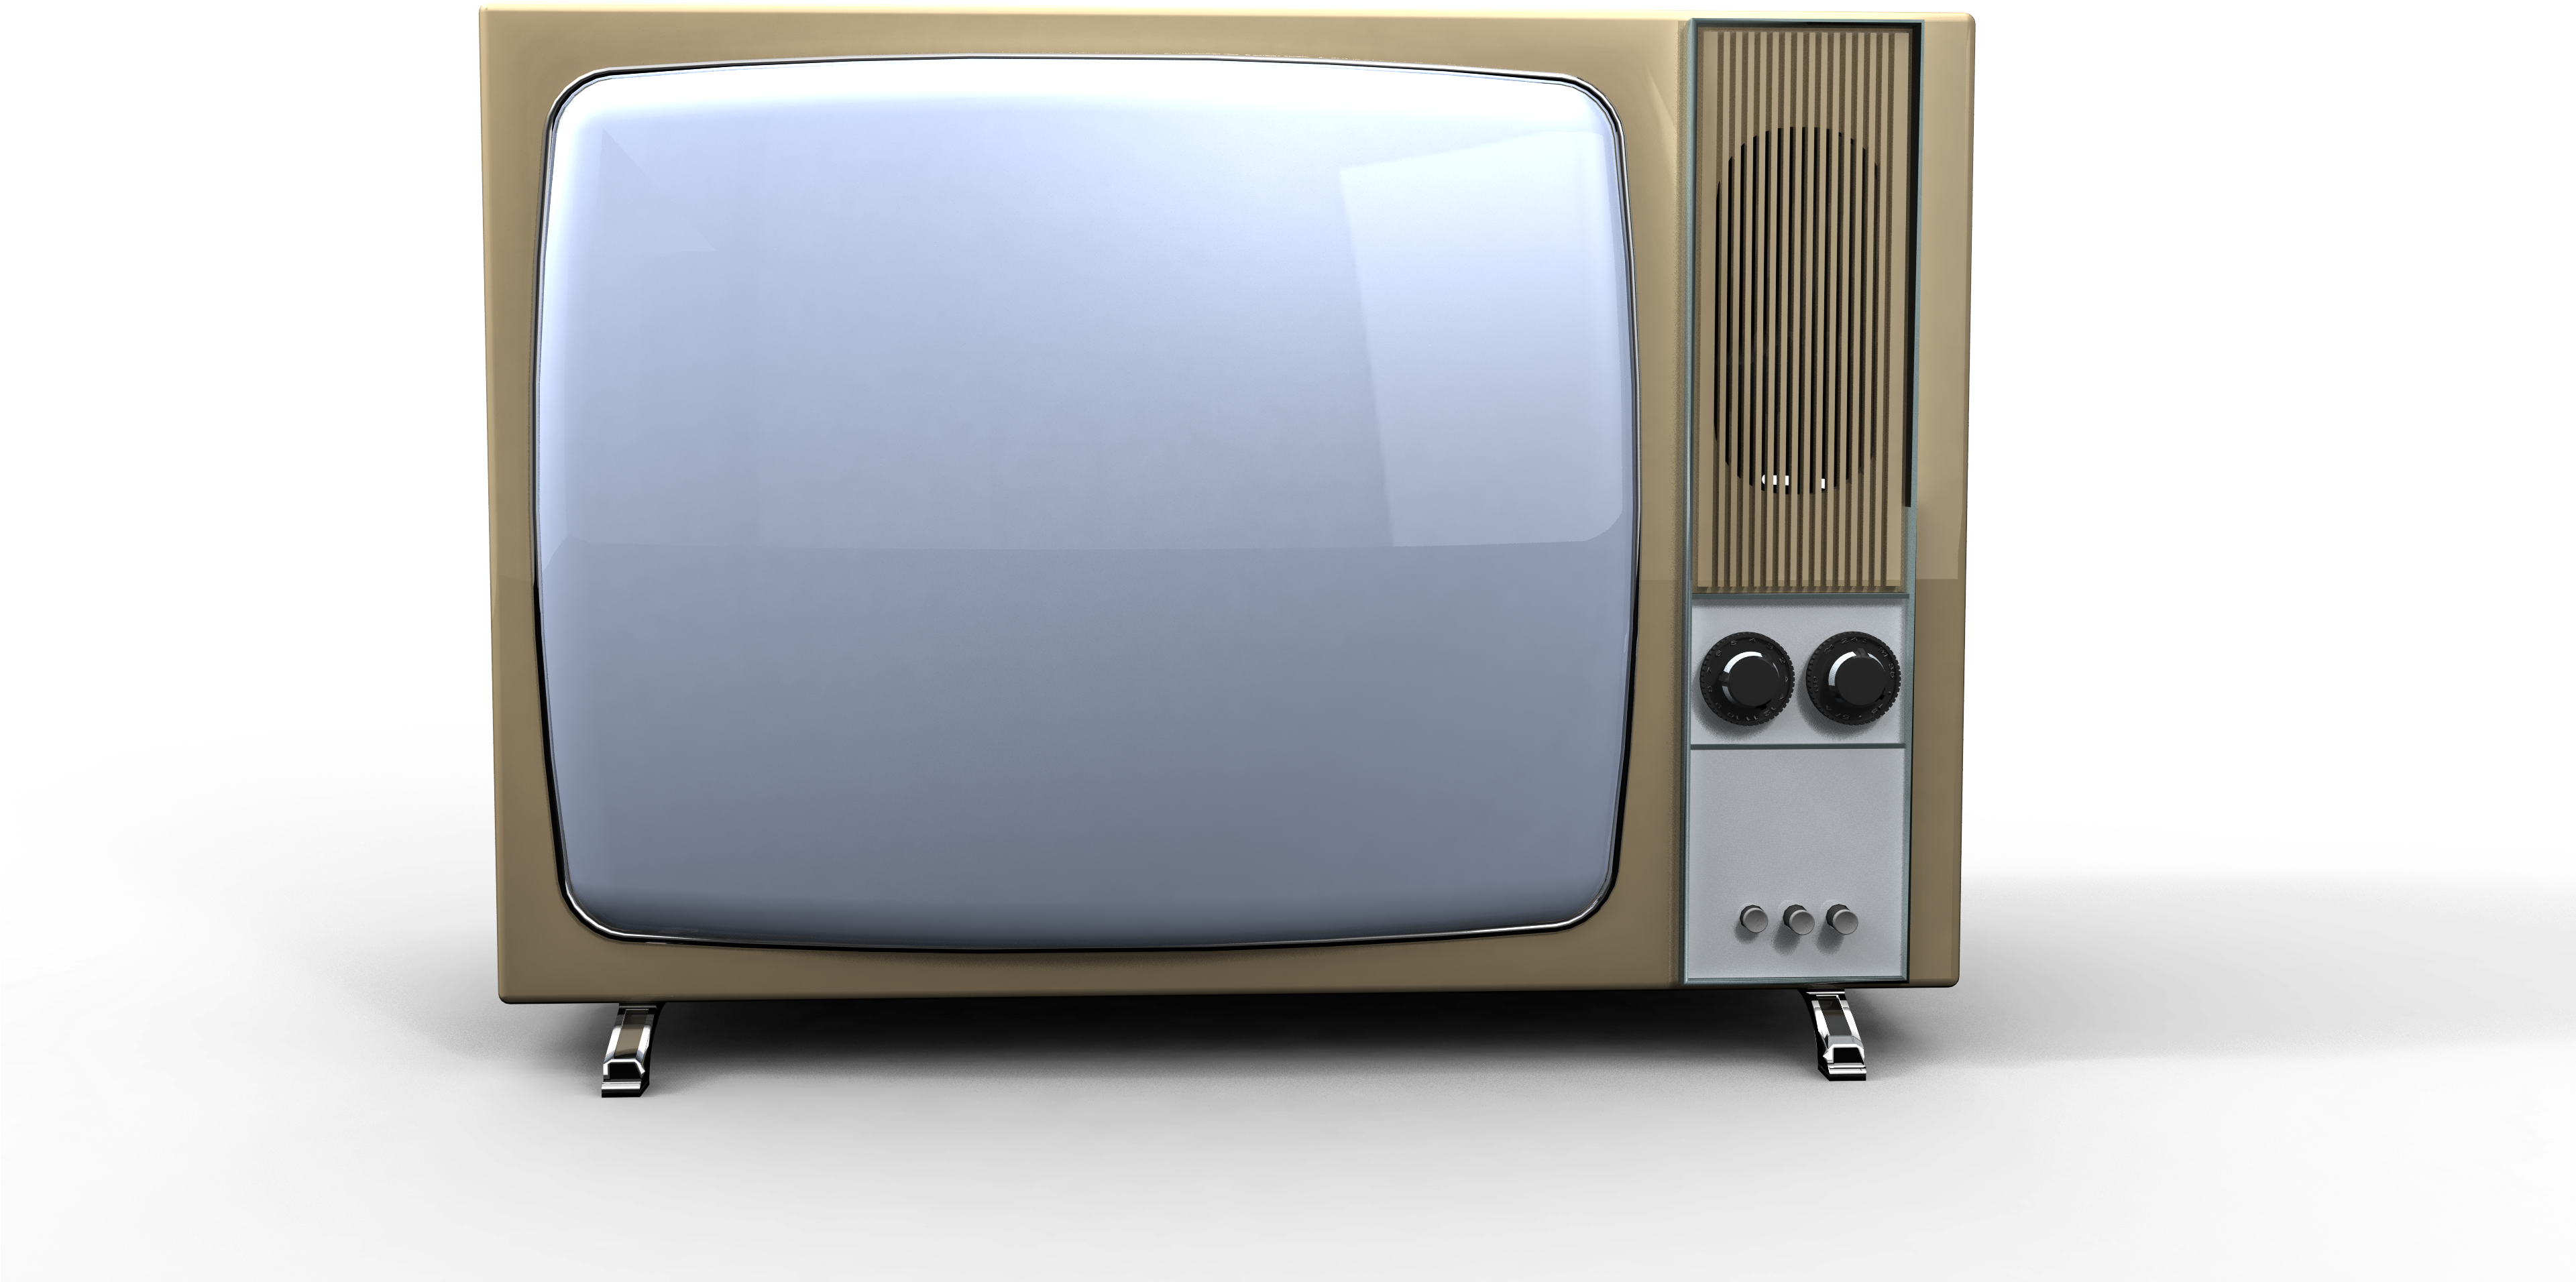 Tv old 2. Старый телевизор. Старинный телевизор. Ретро телевизор сбоку. Старый телевизор на белом фоне.